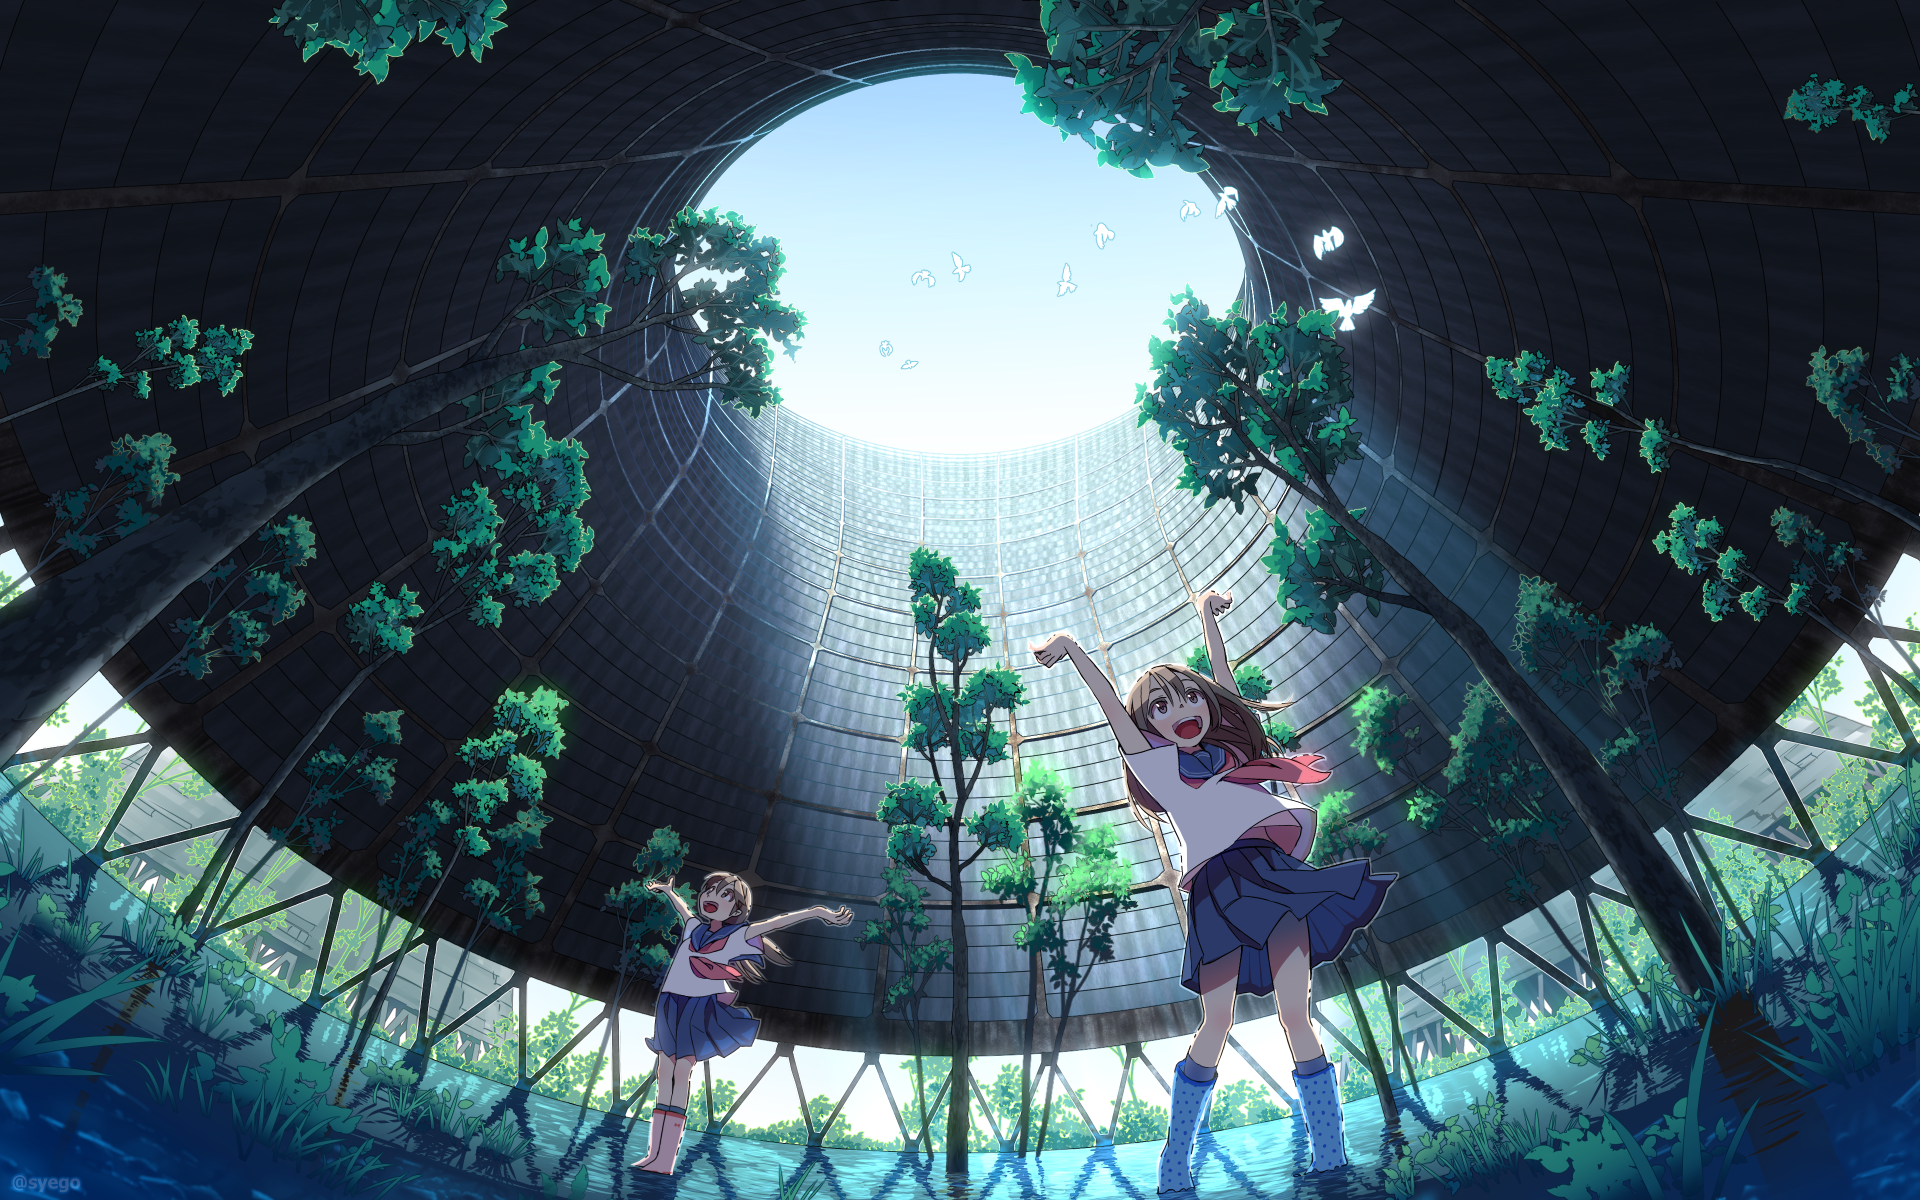 Anime Anime Girls Syego Happy School Uniform Skirt Sky Birds Arms Up Trees Water Building 1920x1200